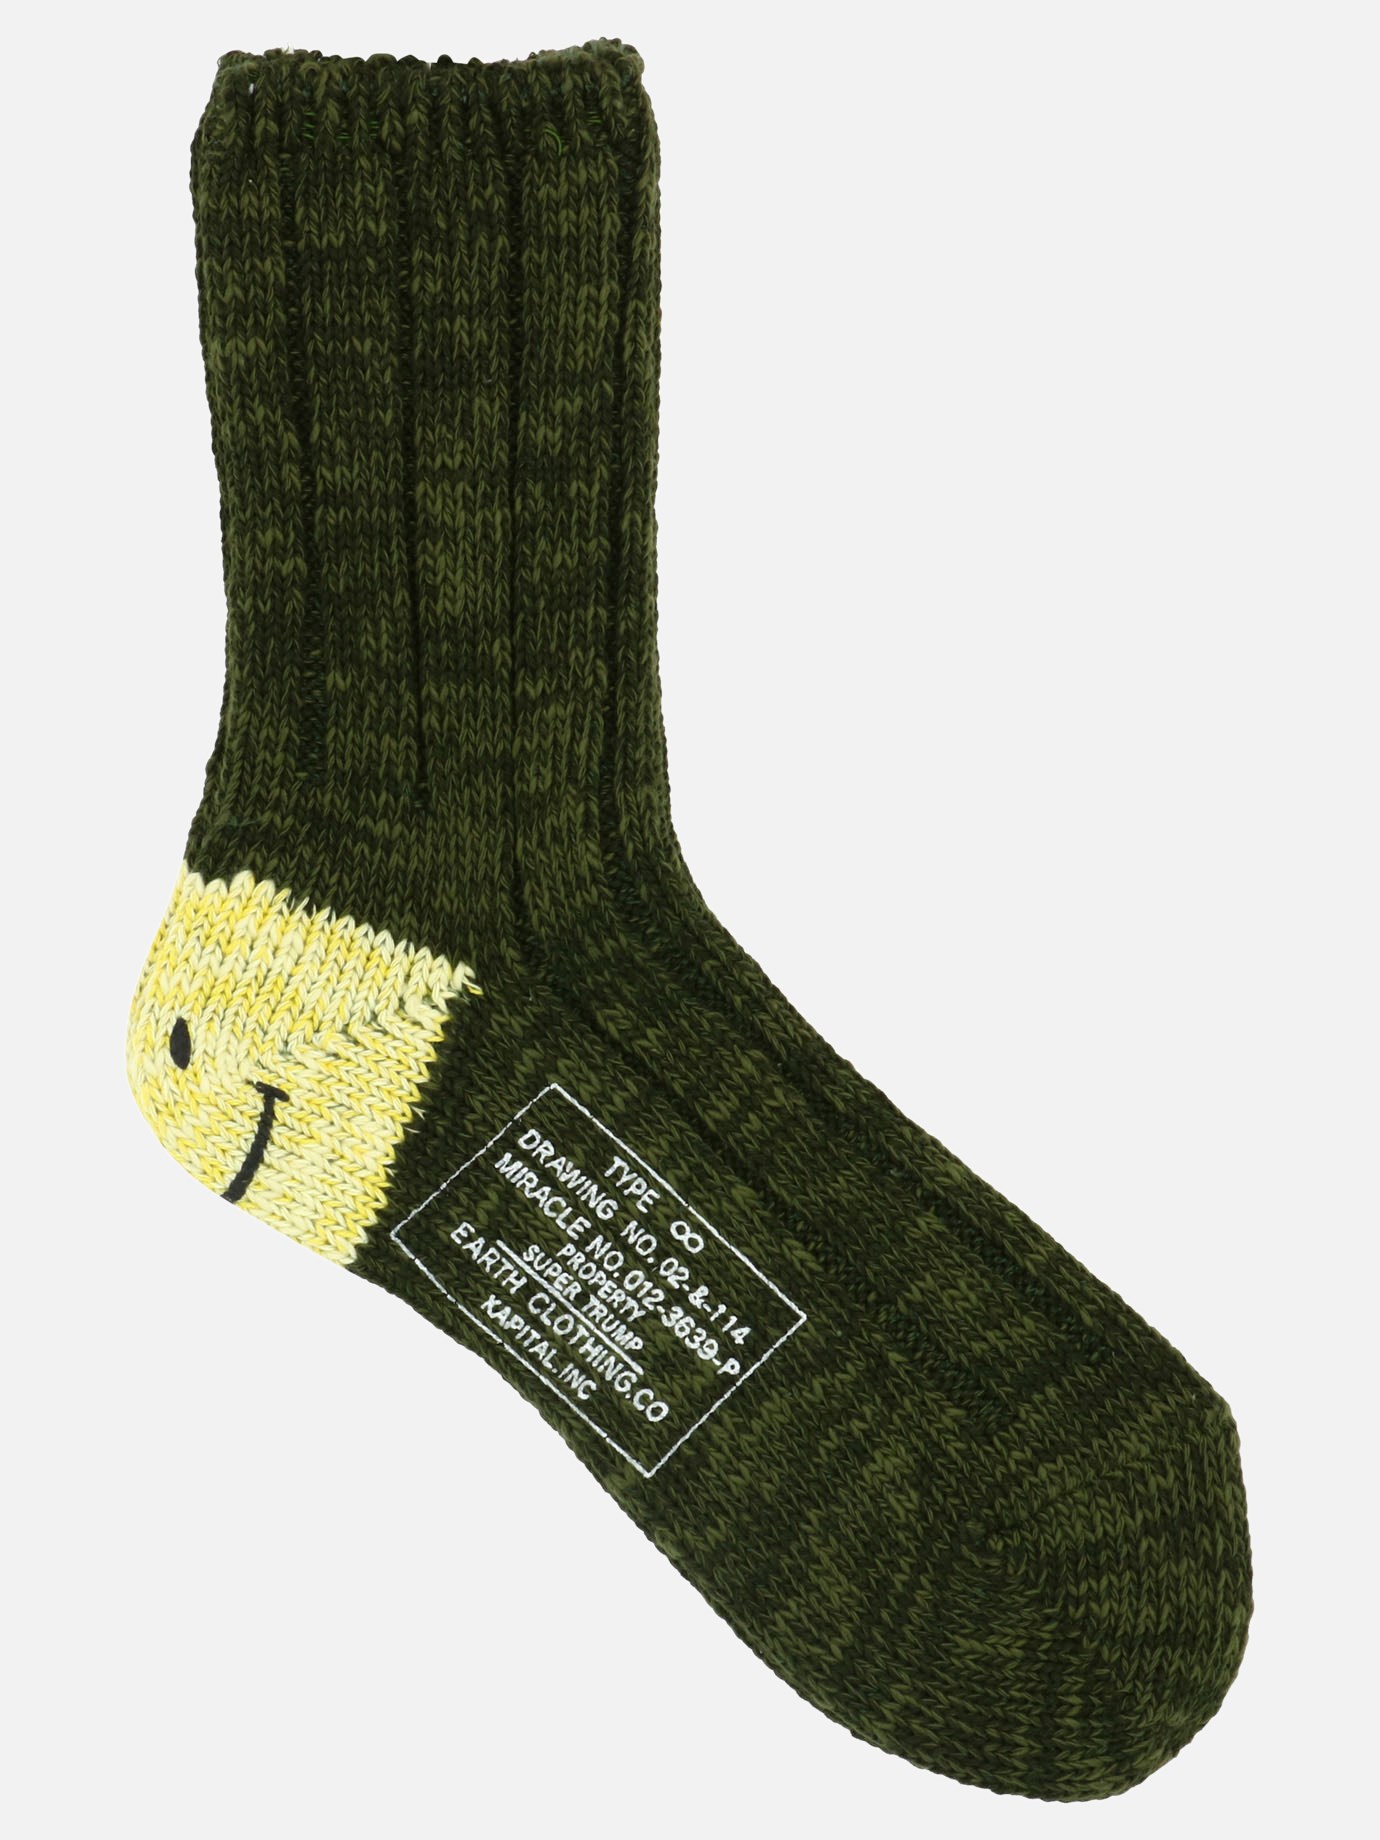  Smiley  socks by Kapital